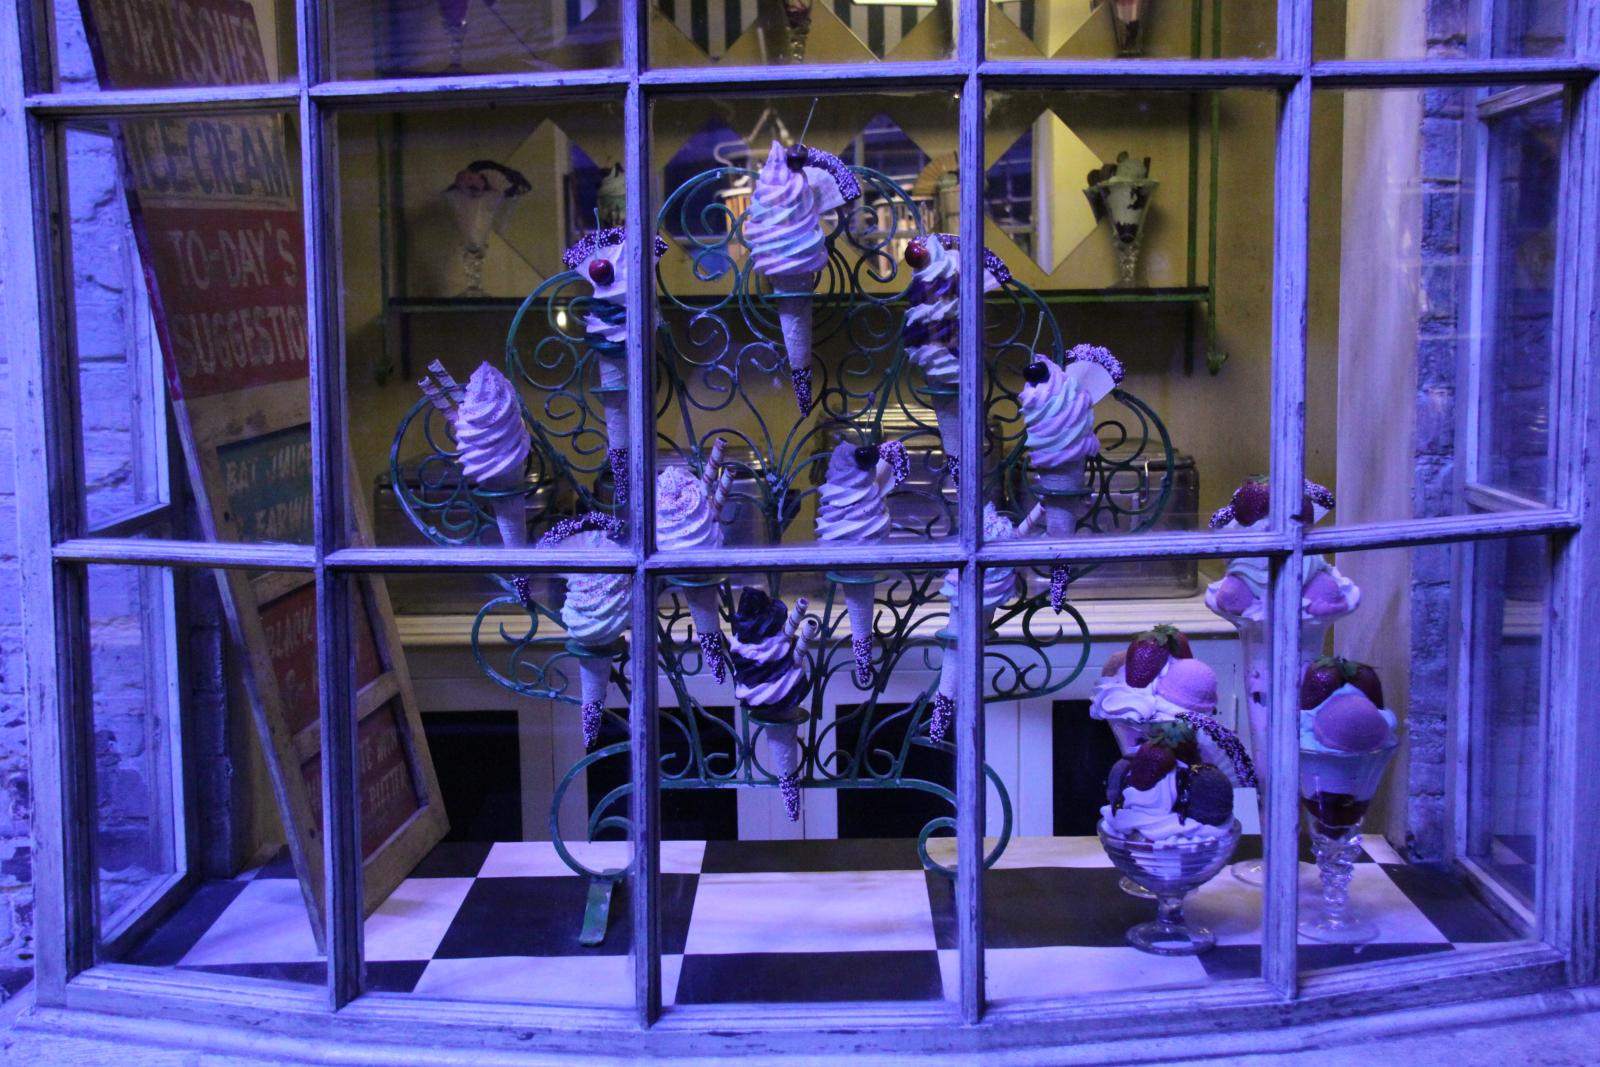 making harry potter5 The Making of Harry Potter, Warner Bros Studio London